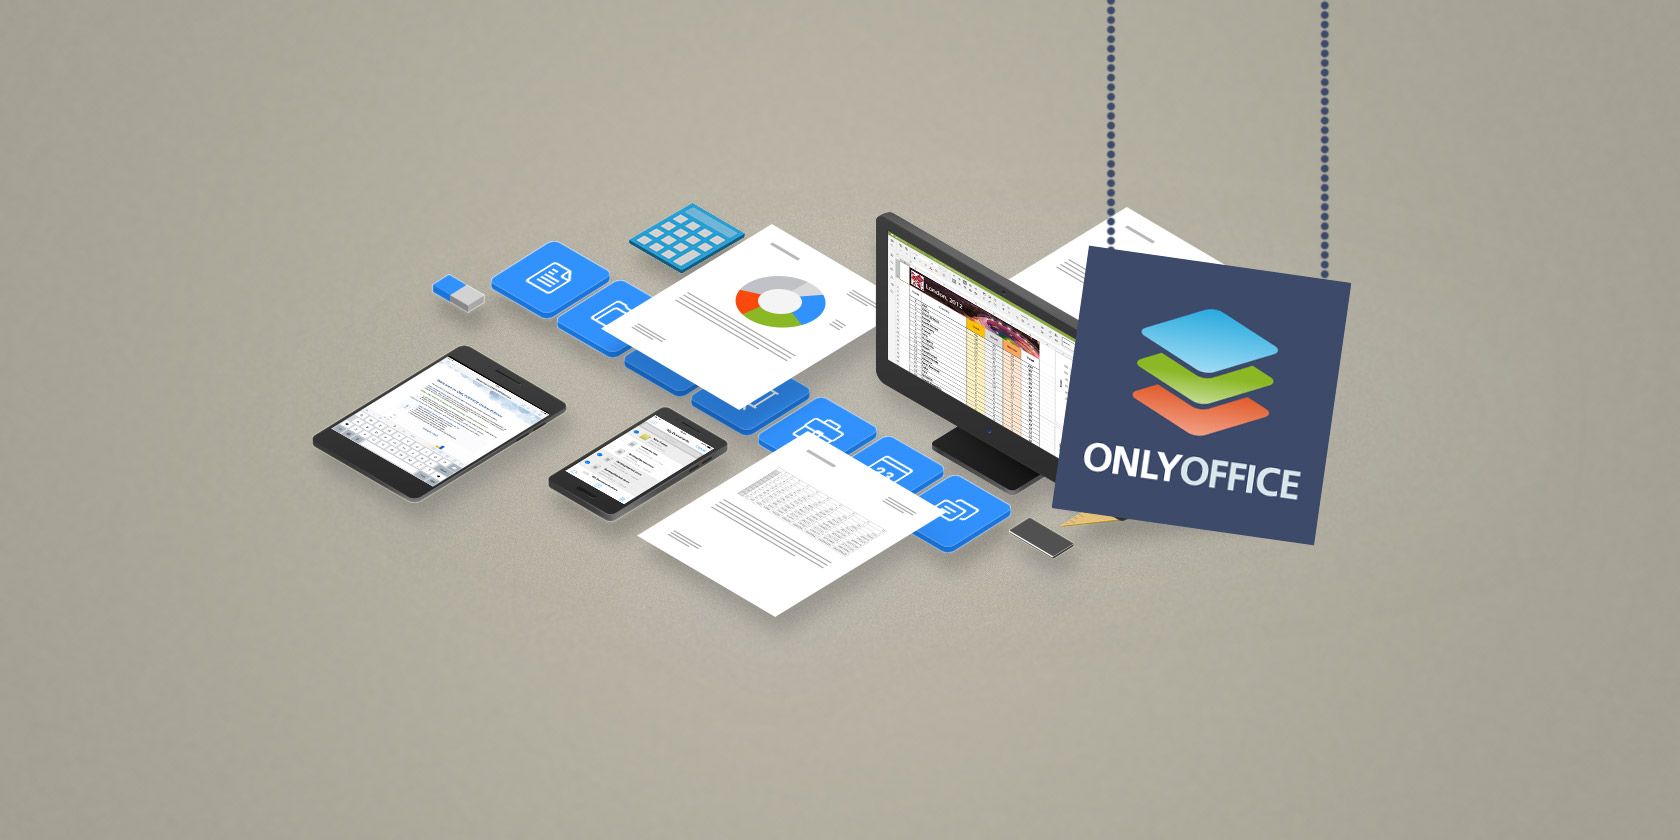 onlyoffice-open-source